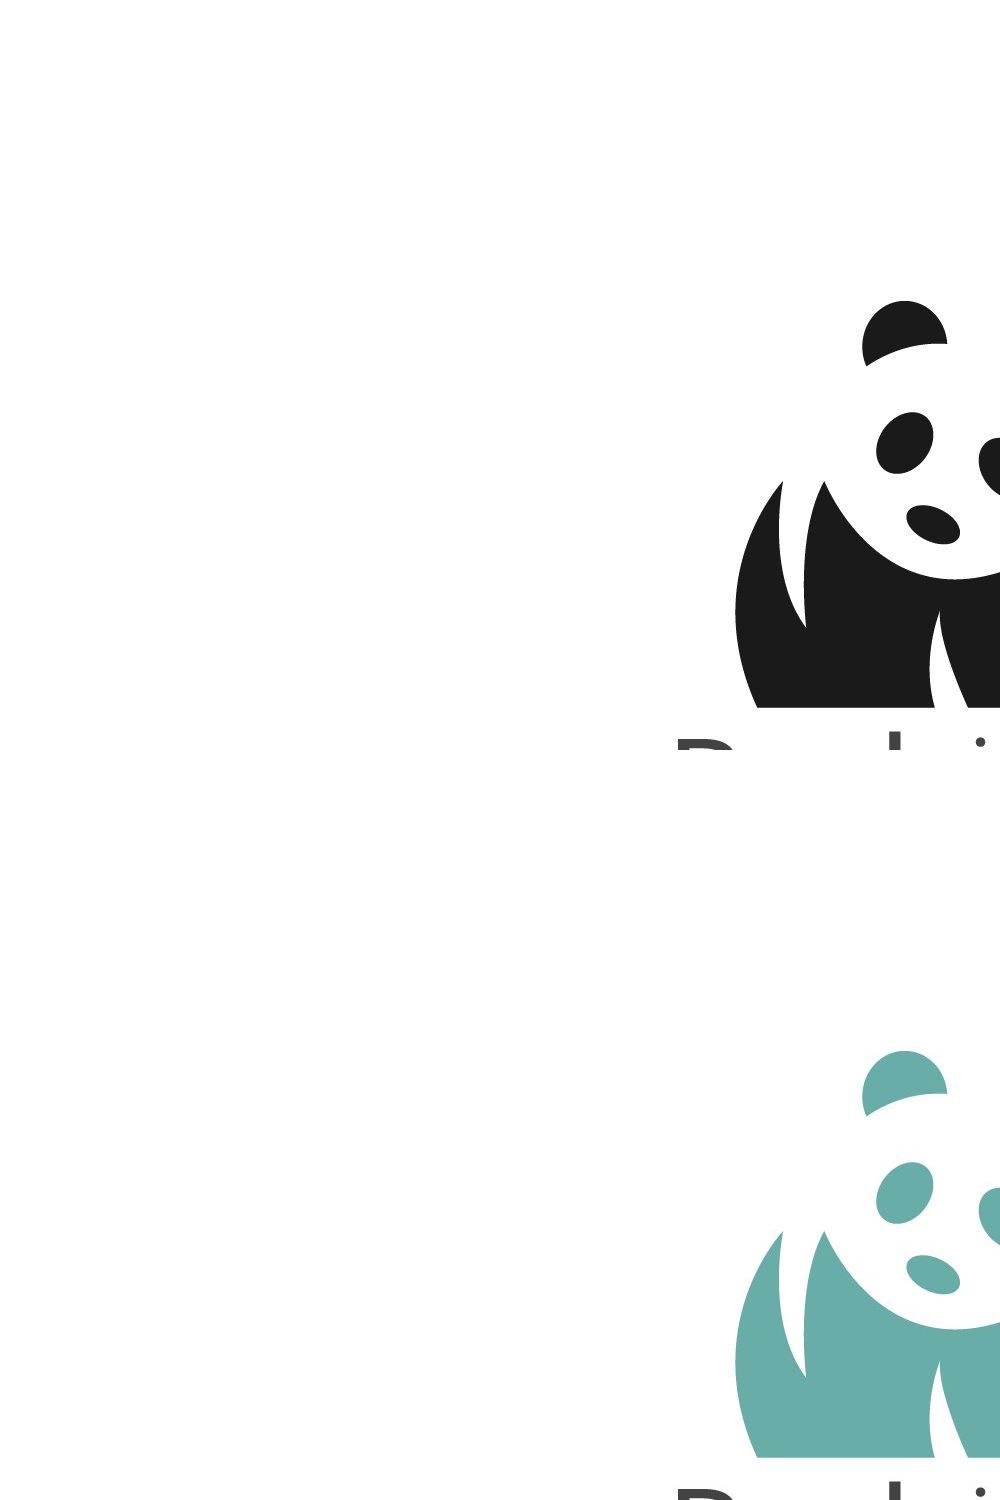 Head Of Panda Logo Design Template. pinterest preview image.